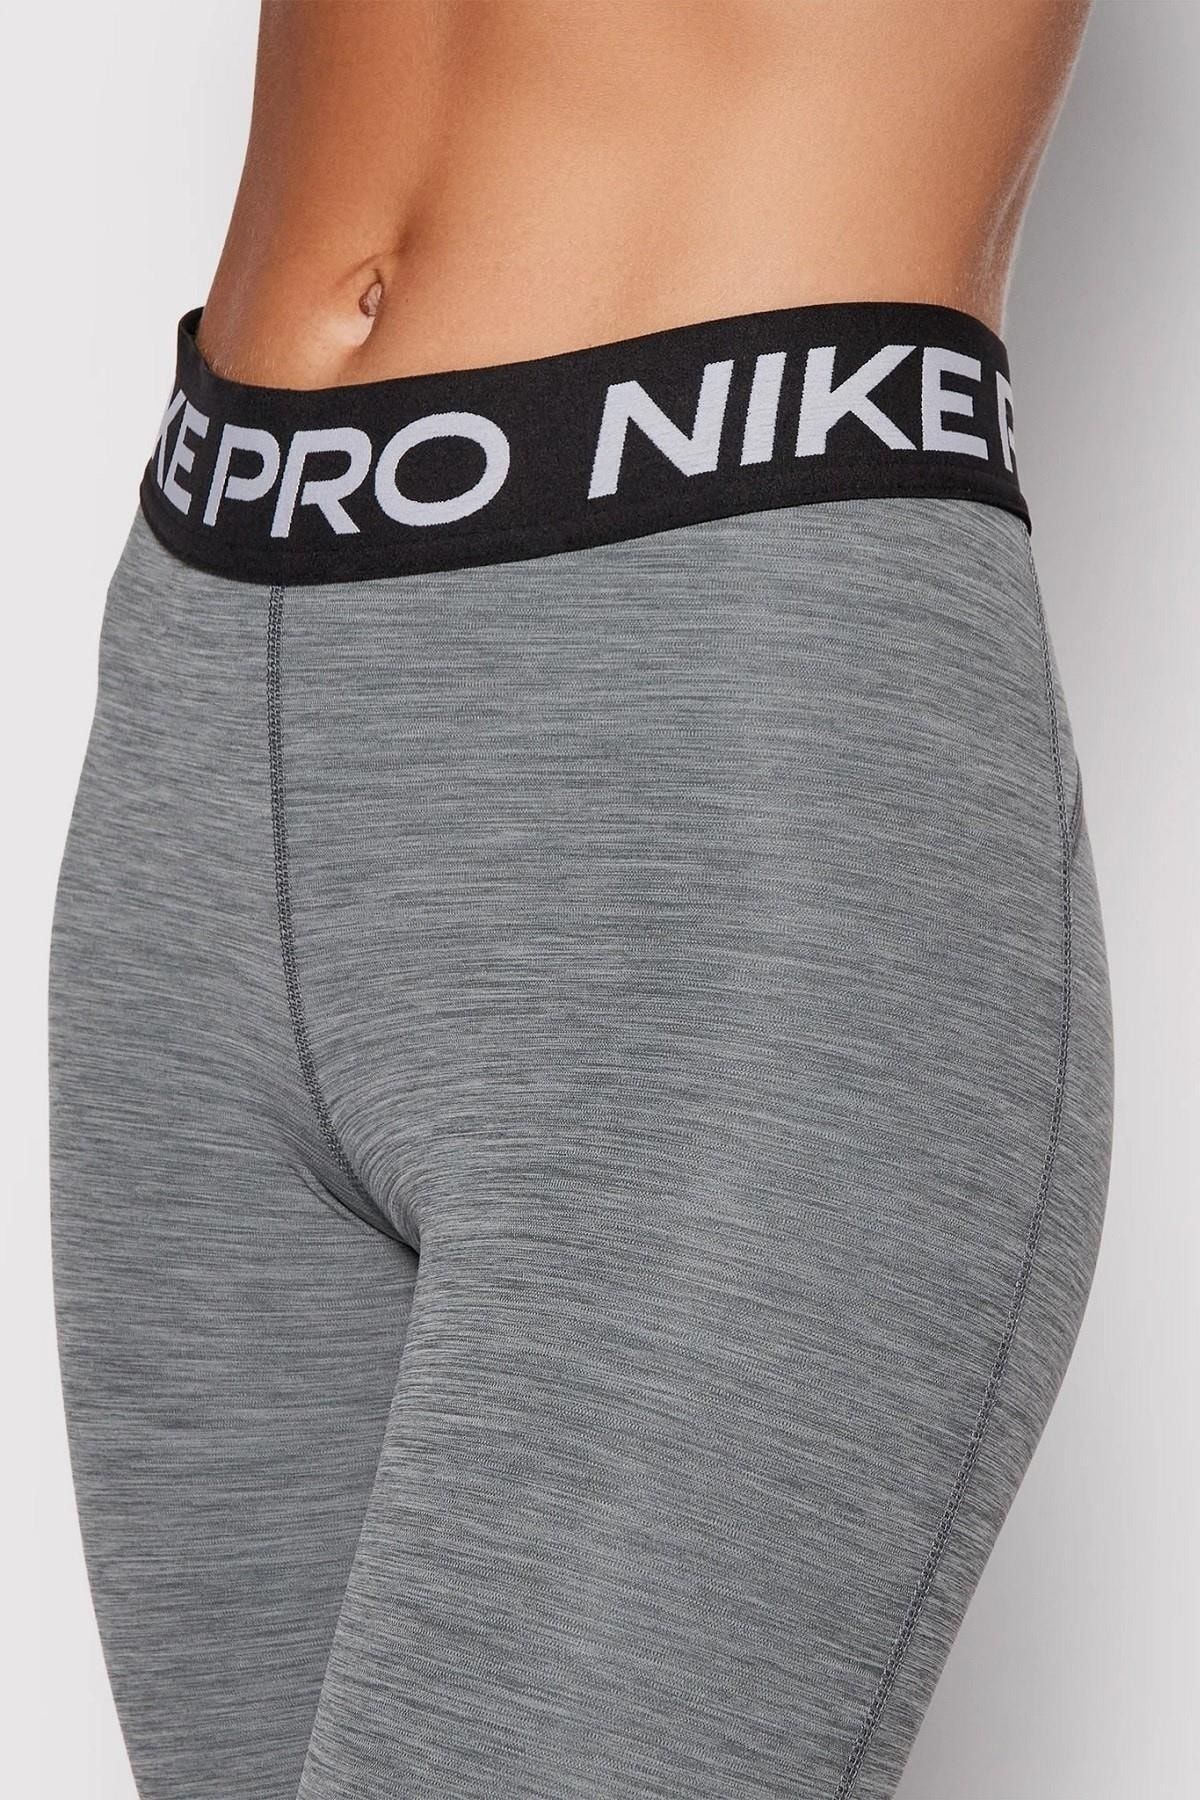 Nike Pro Women's Tights